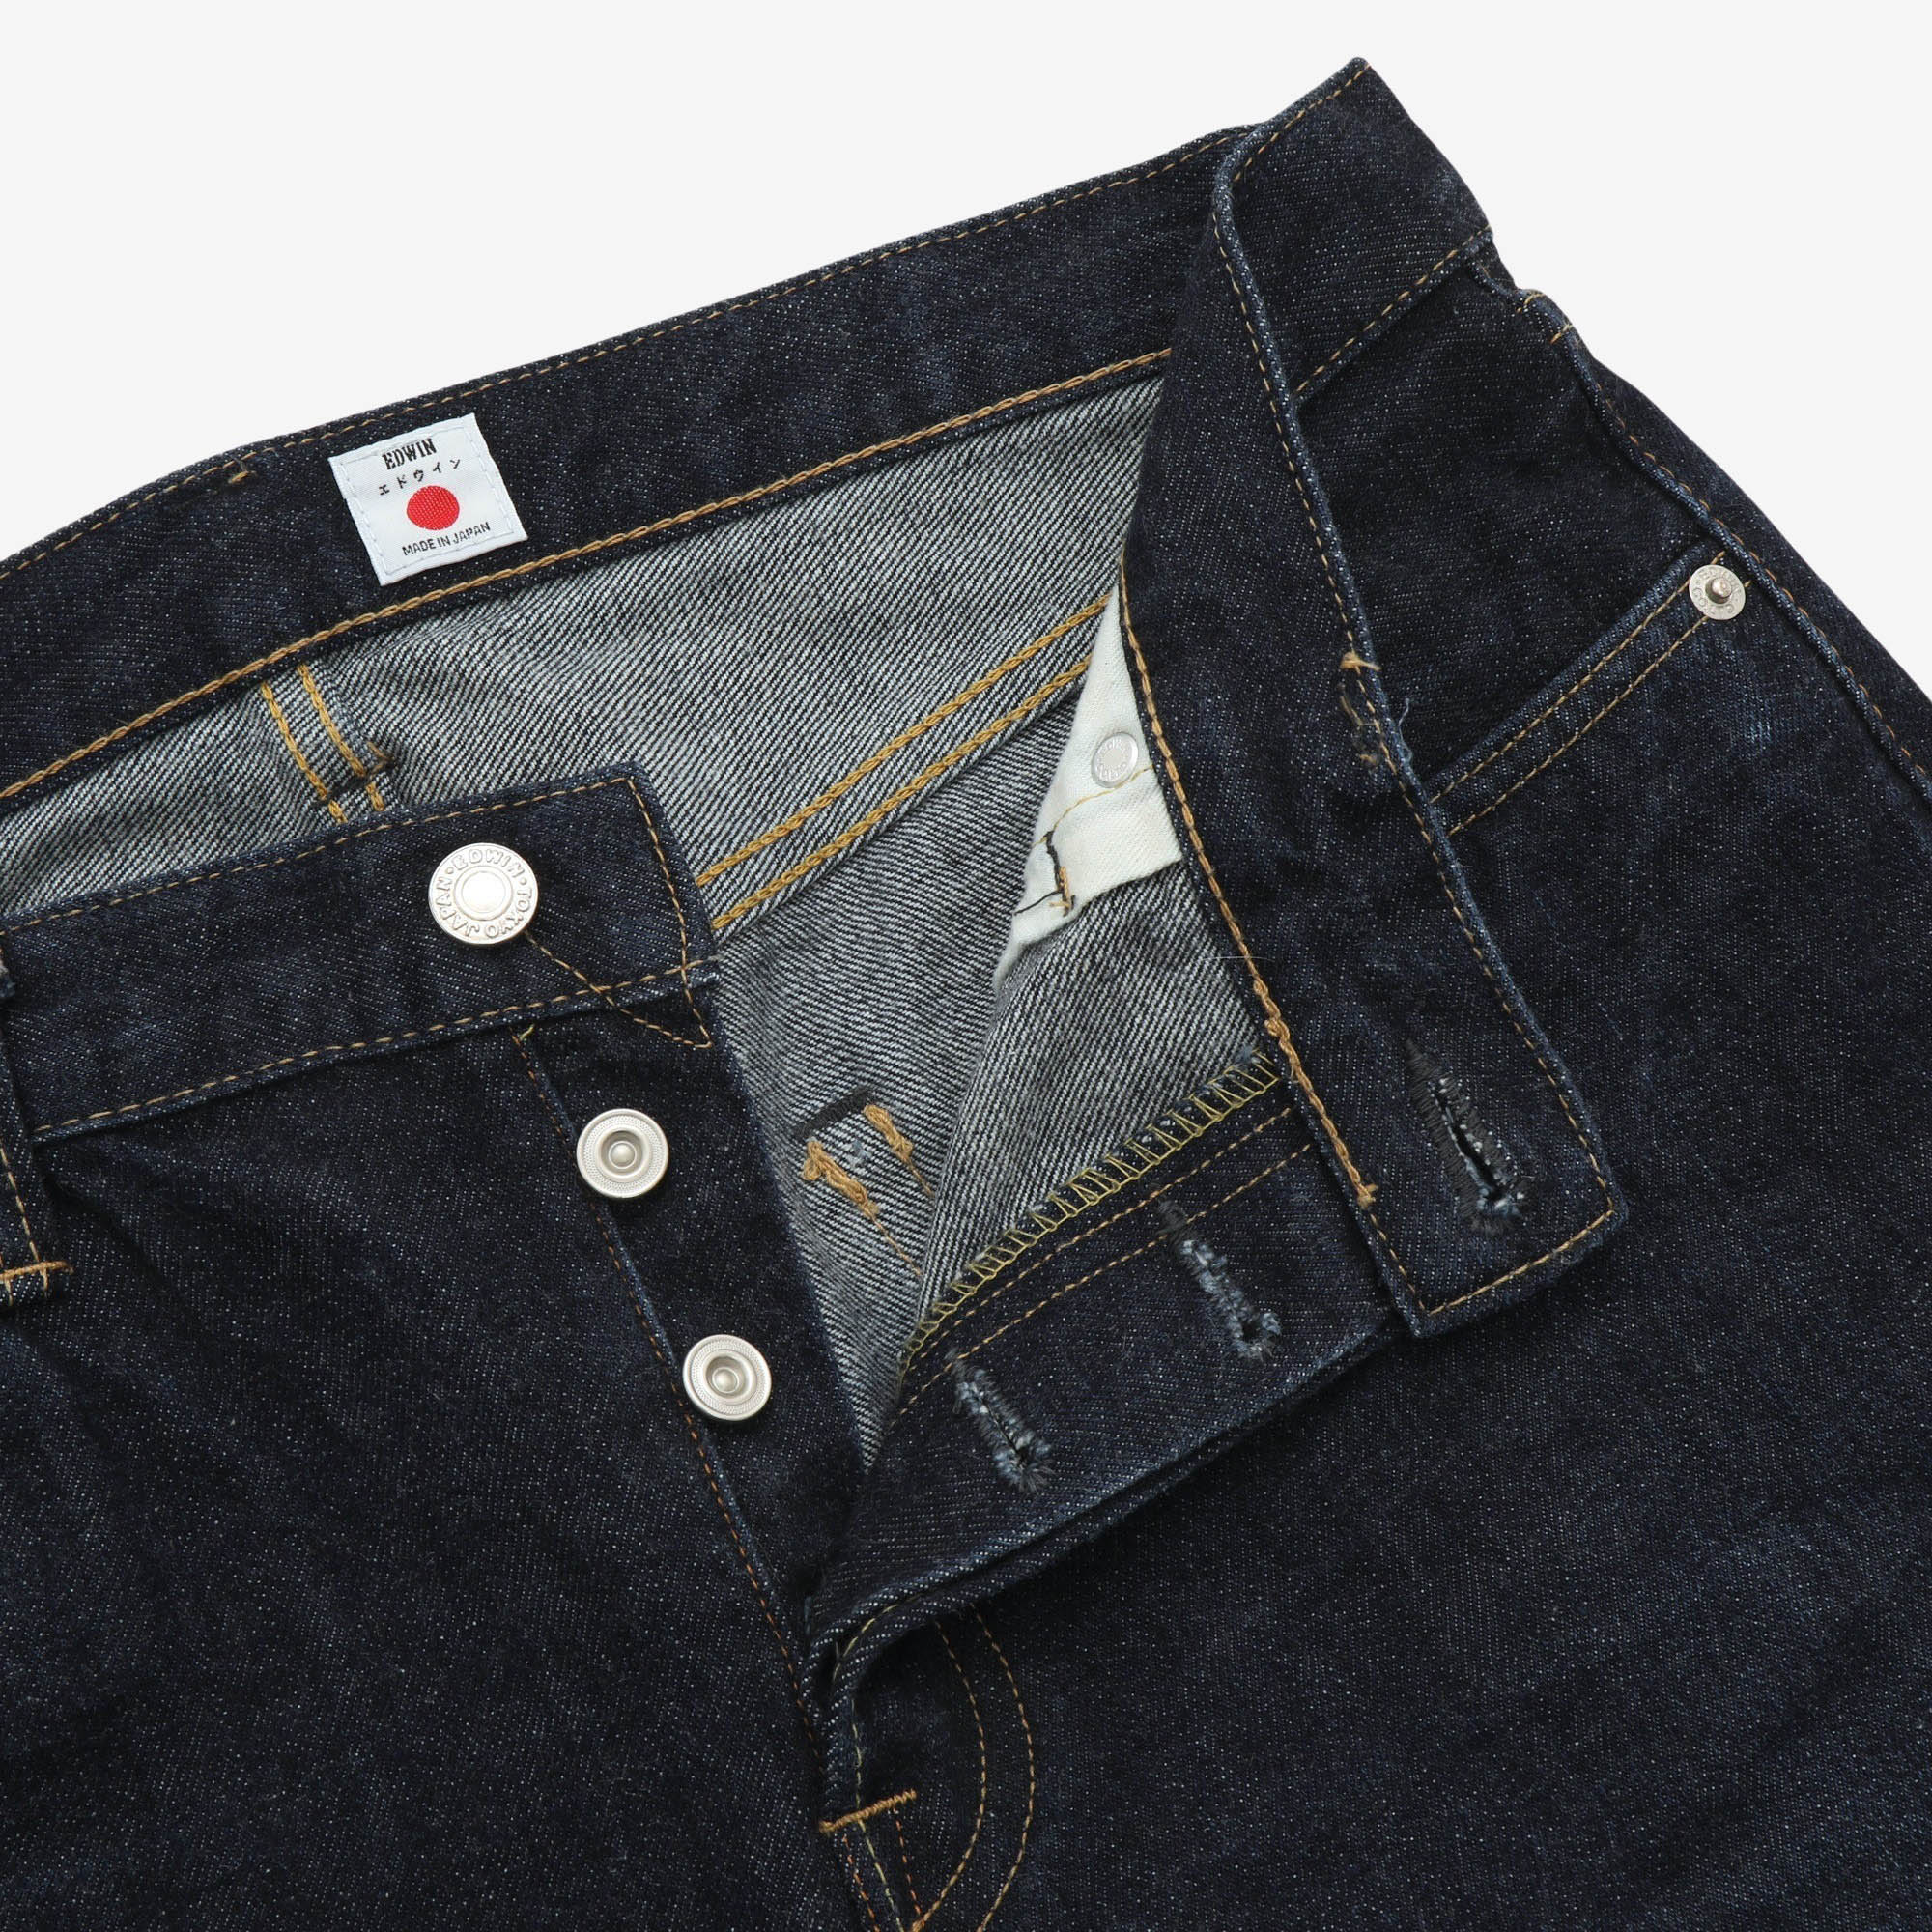 Japanese Denim Jeans (32W X 28L)